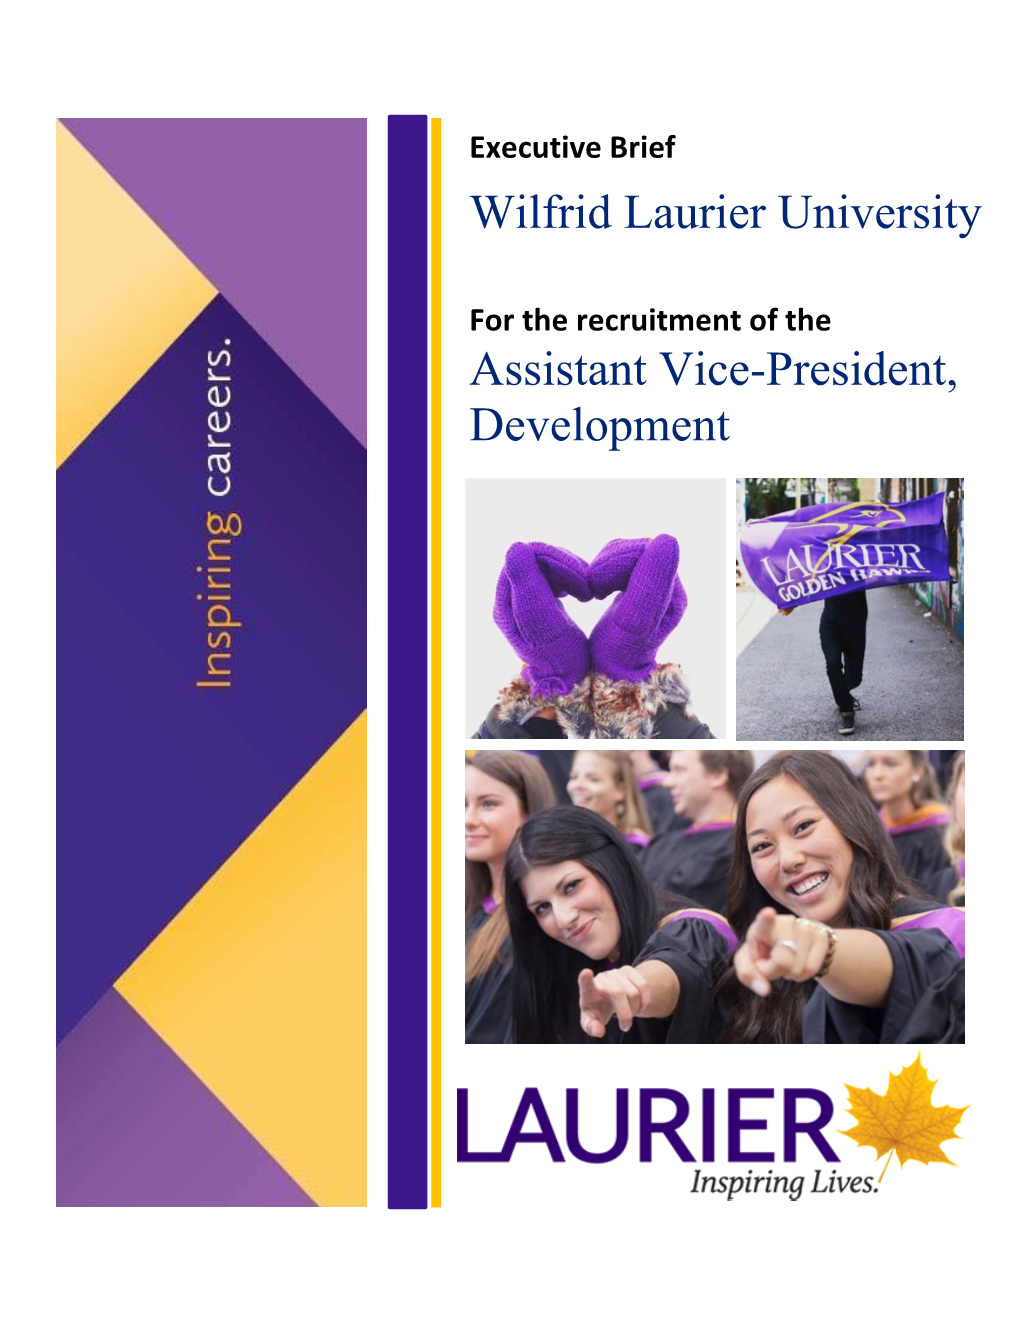 Wilfrid Laurier University Assistant Vice-President, Development